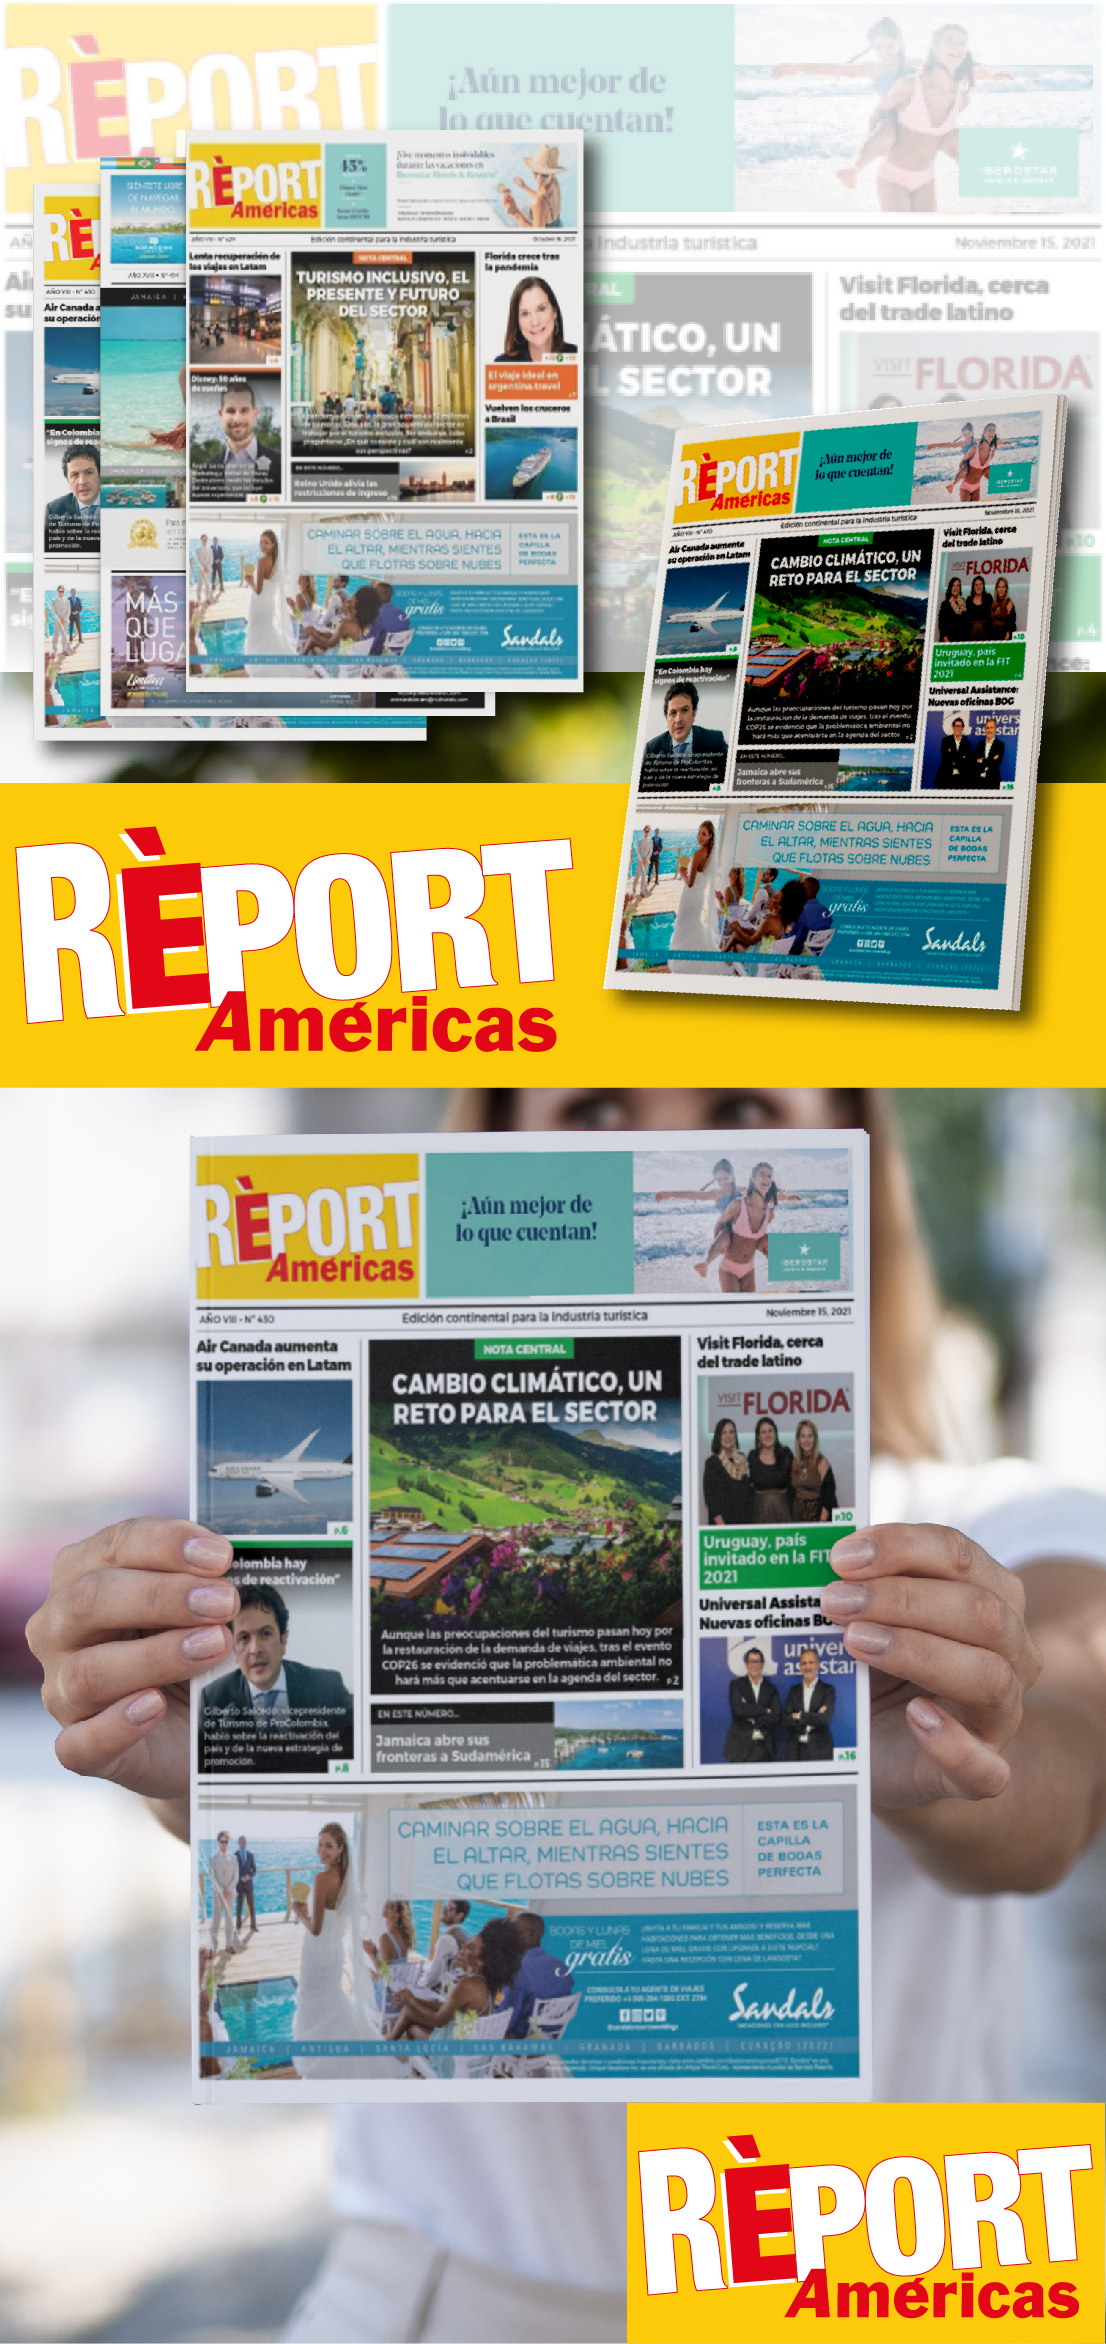 BANNERS A MODIFICAR_REPORT AMERICAS_REPORT AMERICAS_REPORT AMERICAS